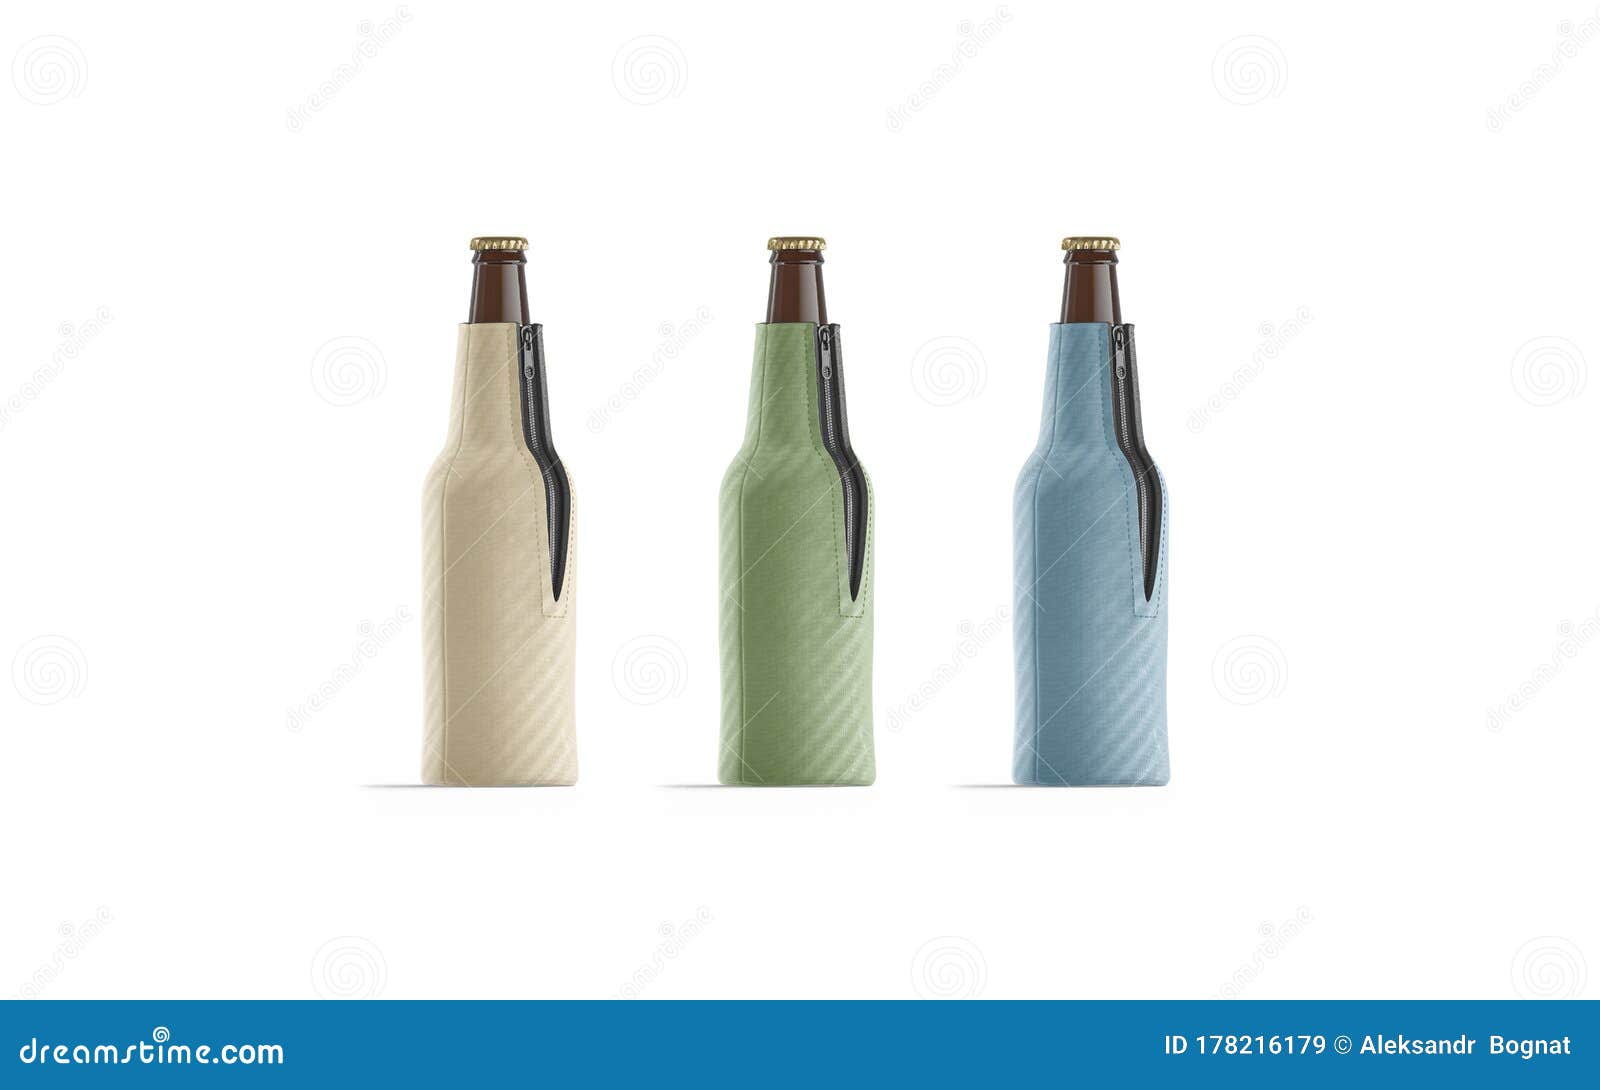 https://thumbs.dreamstime.com/z/blank-colored-collapsible-beer-bottle-koozie-mockup-set-half-turned-view-d-rendering-empty-yellow-green-blue-coolies-sleeve-178216179.jpg